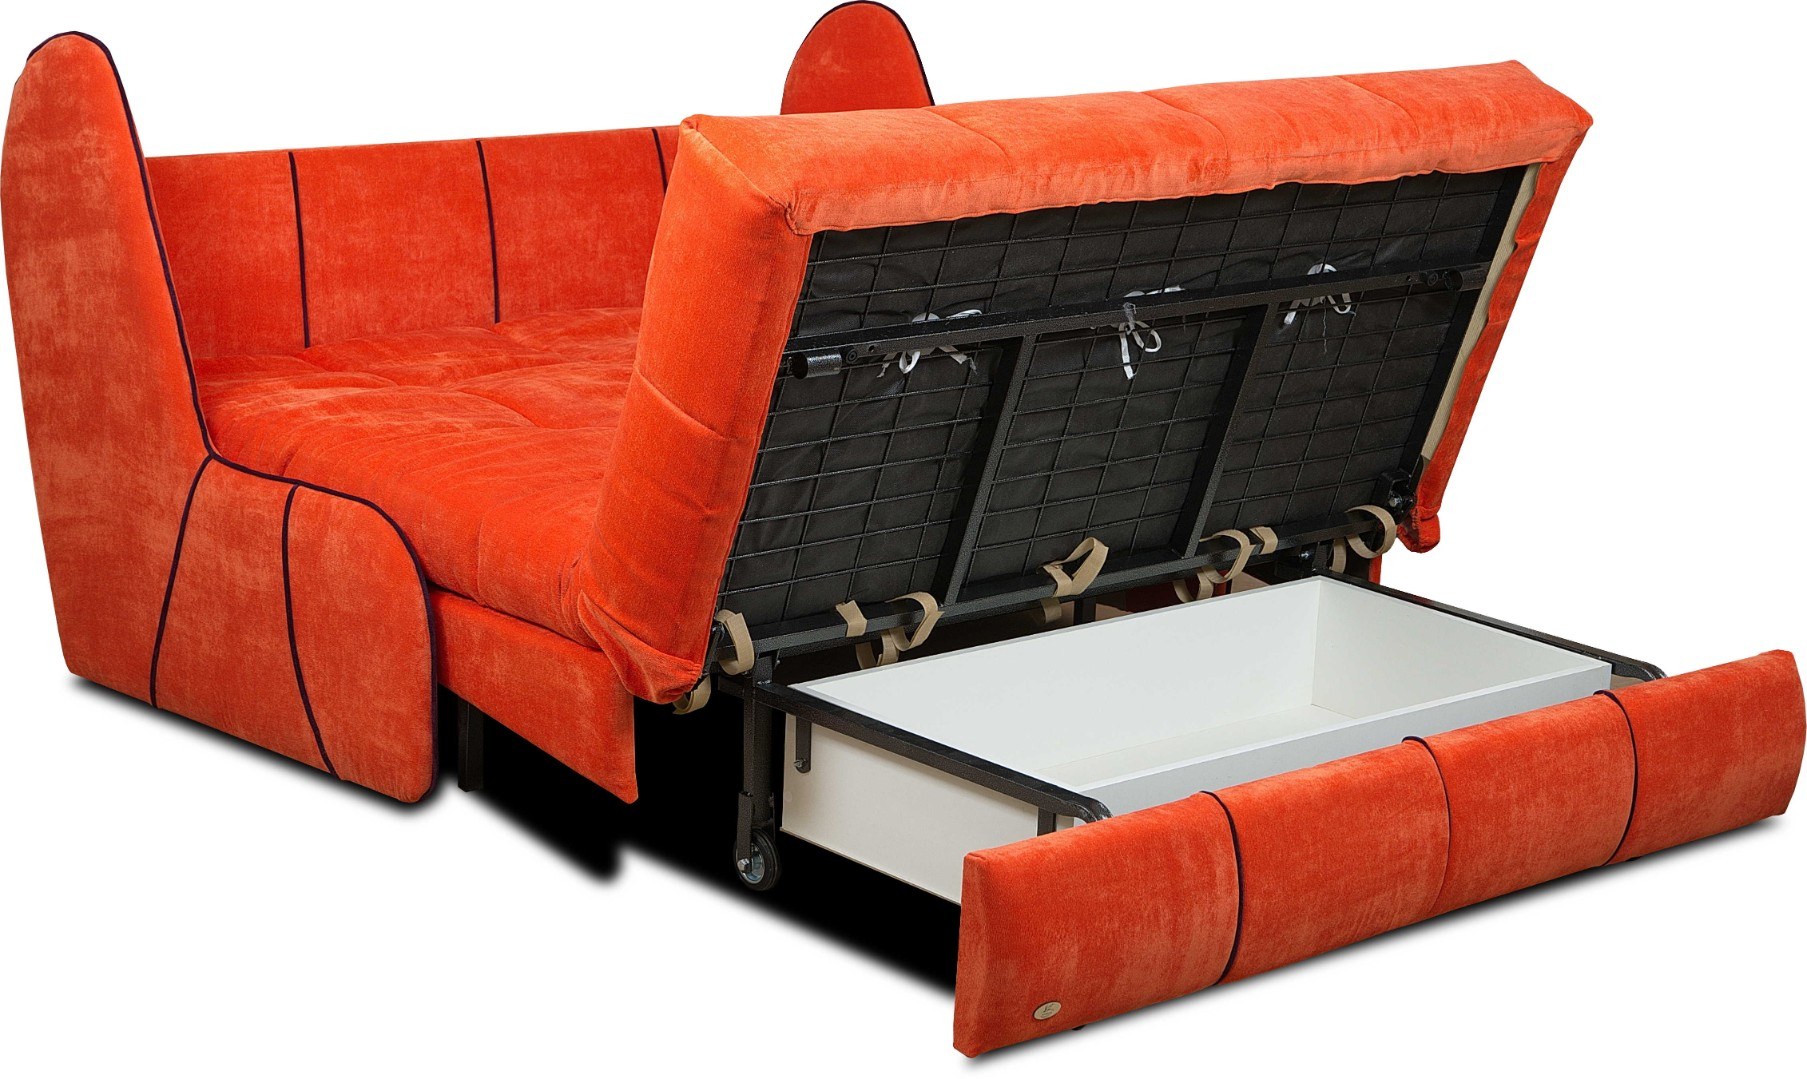 Разобрать диван аккордеон для перевозки пошагово